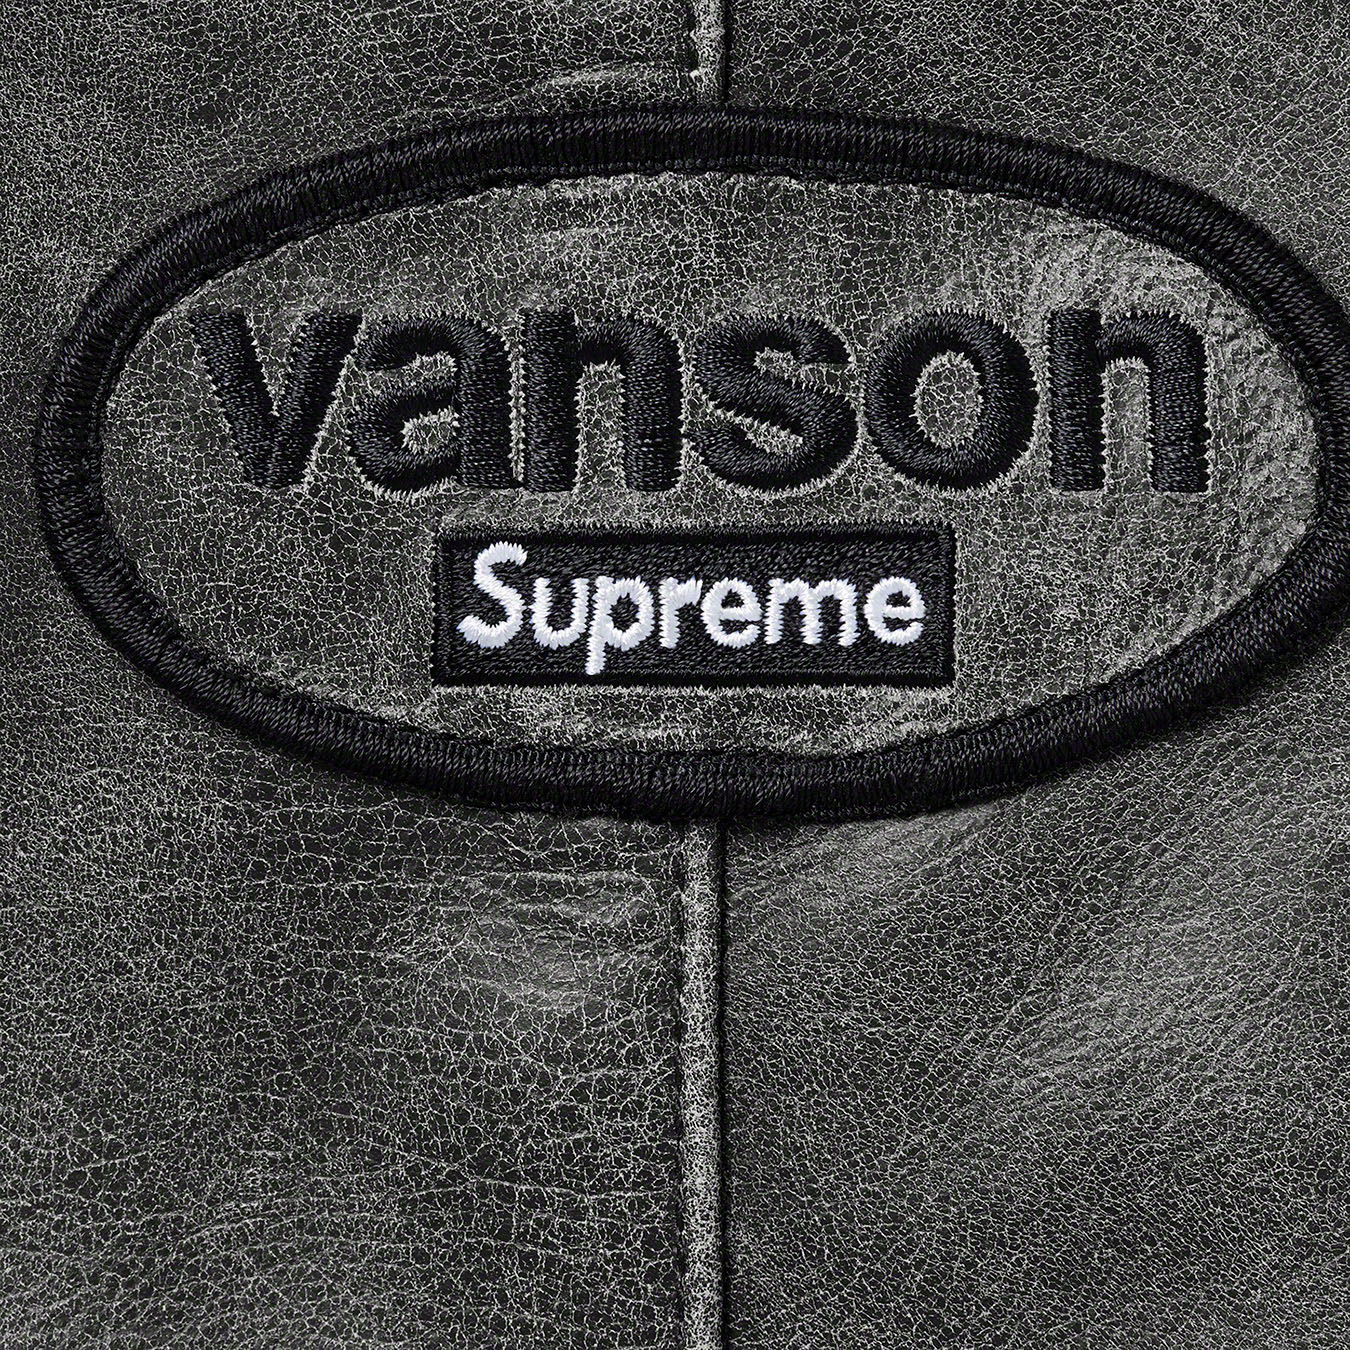 Supreme®/Vanson Leathers® Worn Leather Jacket